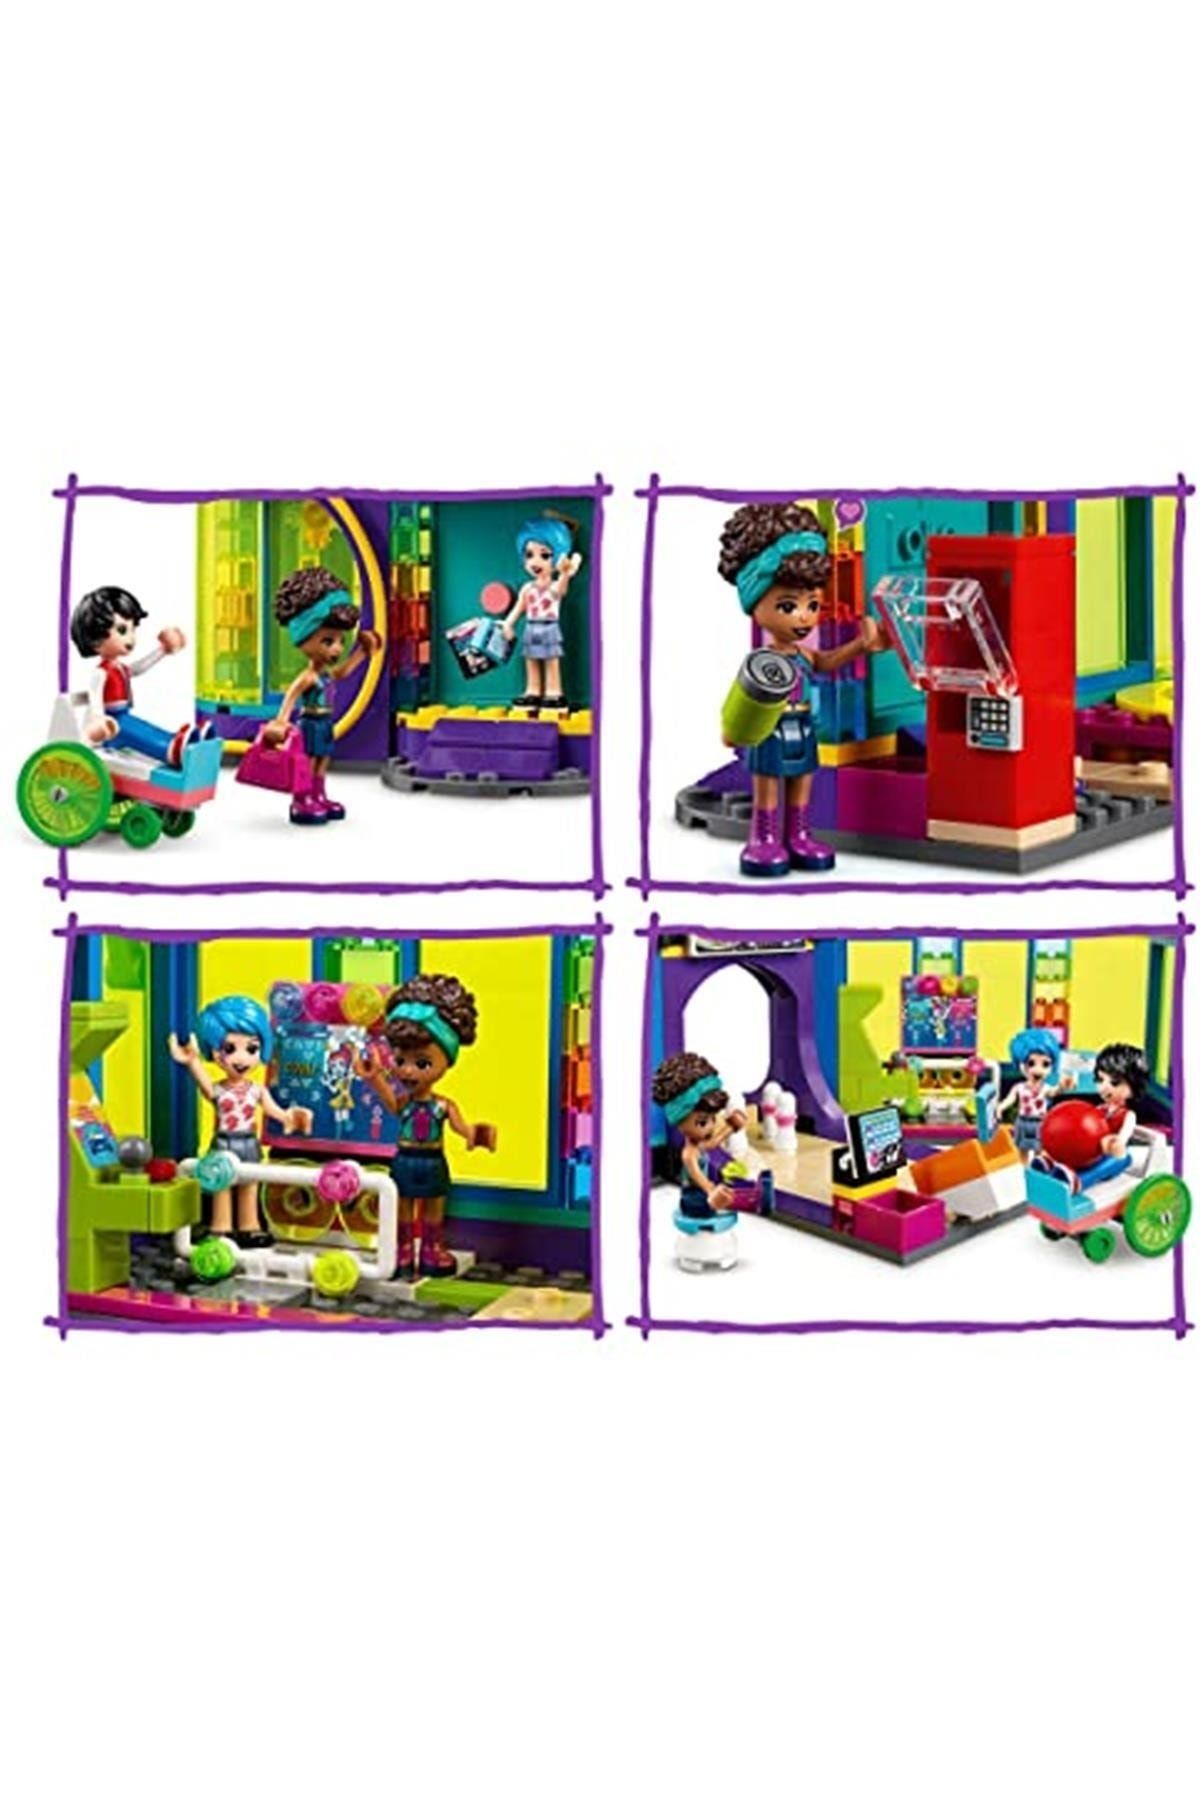 LEGO لگو بازی Friends Roll Disco Hall 41708 برای سنین 7 سال به بالا با 3 عروسک کوچک از جمله آندریا